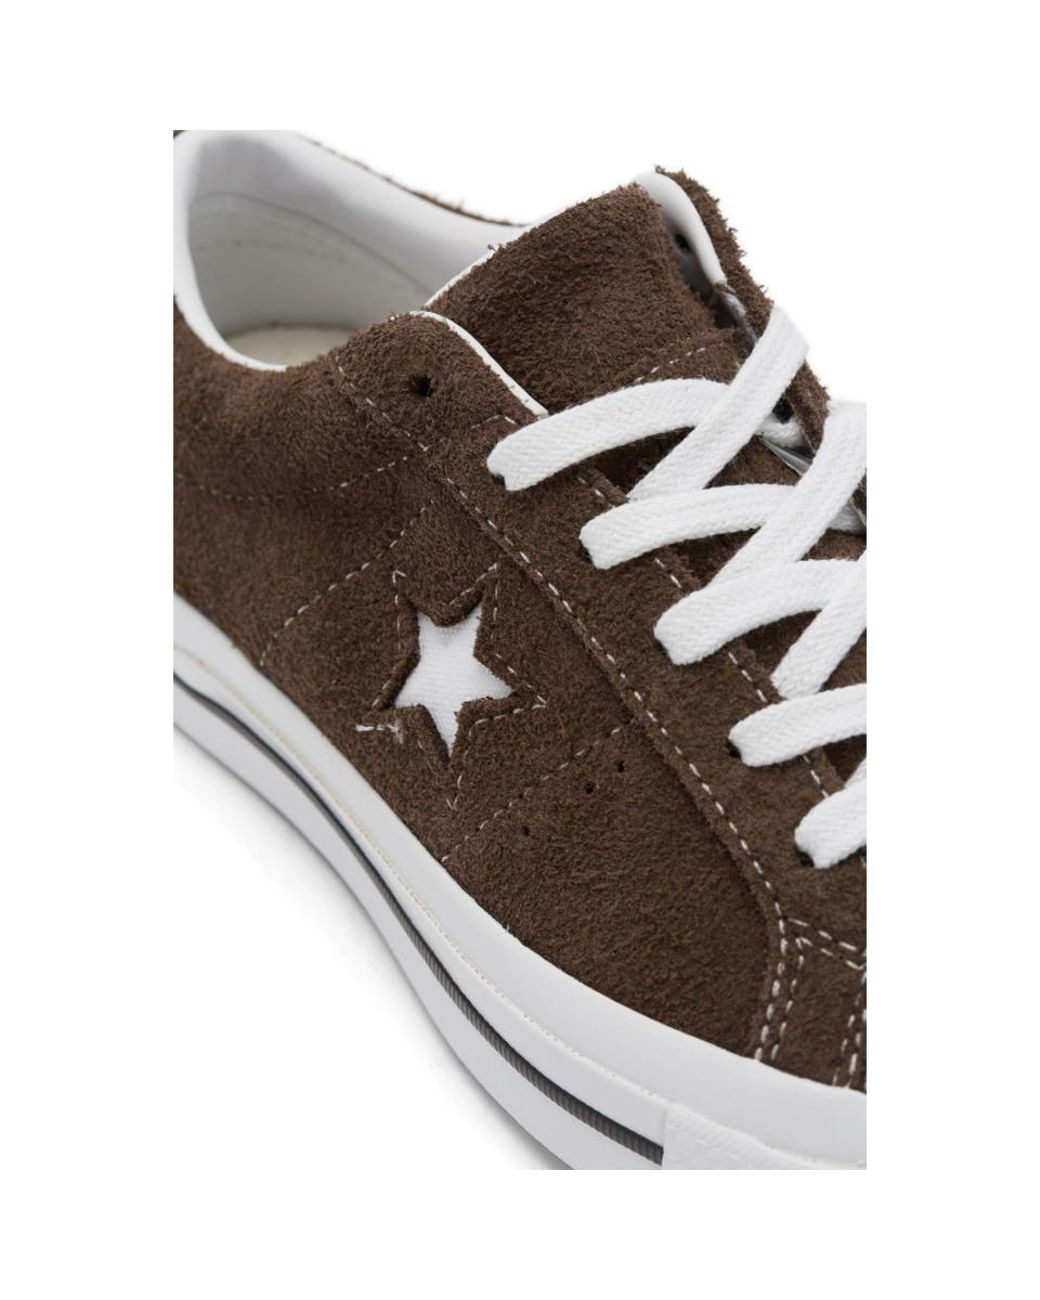 Converse One Star Suede Ox Sneaker | Swag shoes, Best sneakers, Sneakers